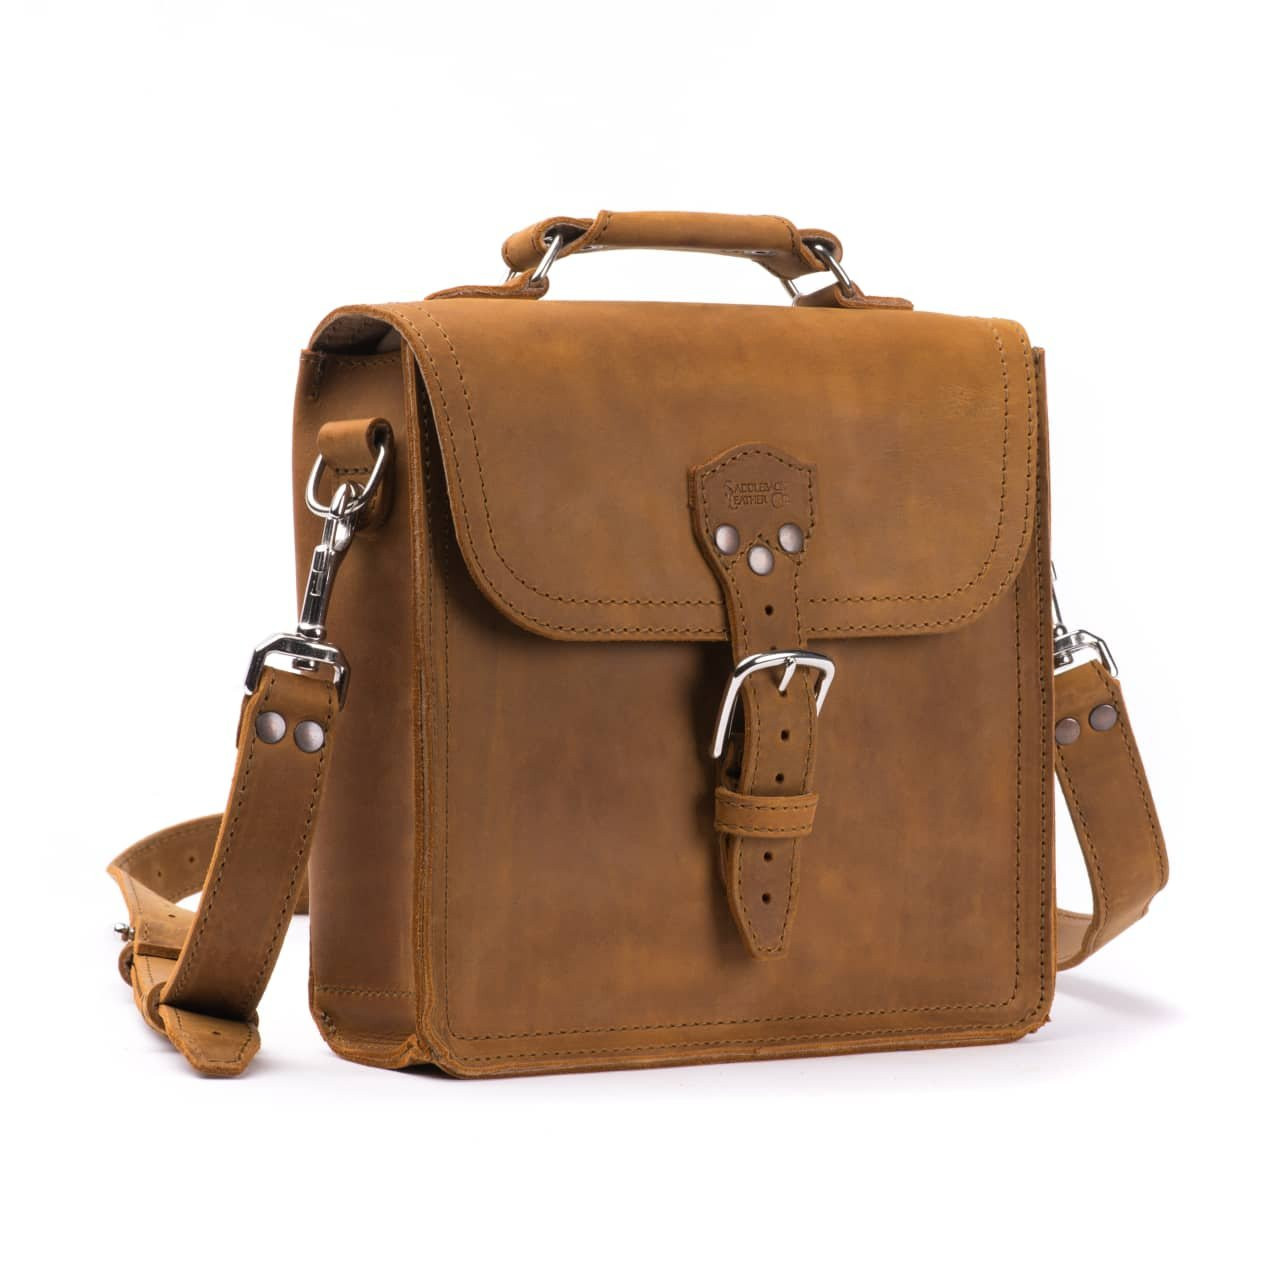 leather-satchel-for-man-bag-edc-indiana-jones-quality-toba-brownleather-satchel-for-man-bag-edc-indiana-jones-quality-tan-brown-front-side__27414.1603855093.1280.1280.jpg